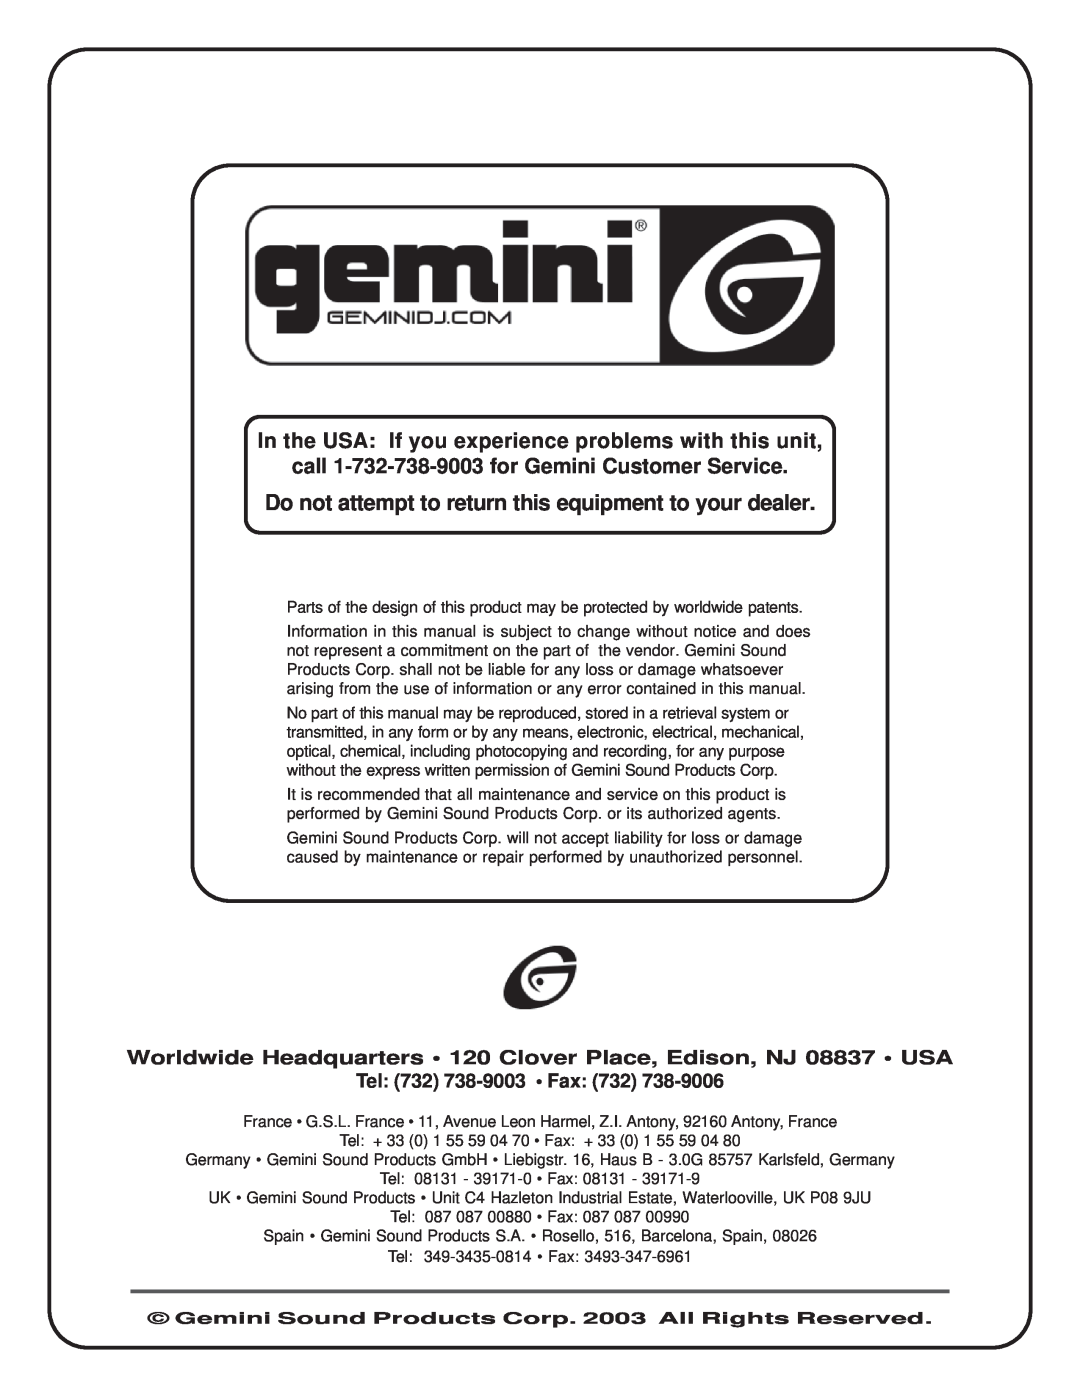 Gemini XL-DD50 IV E manual call 1-732-738-9003for Gemini Customer Service, Tel 732 738-9003 Fax 